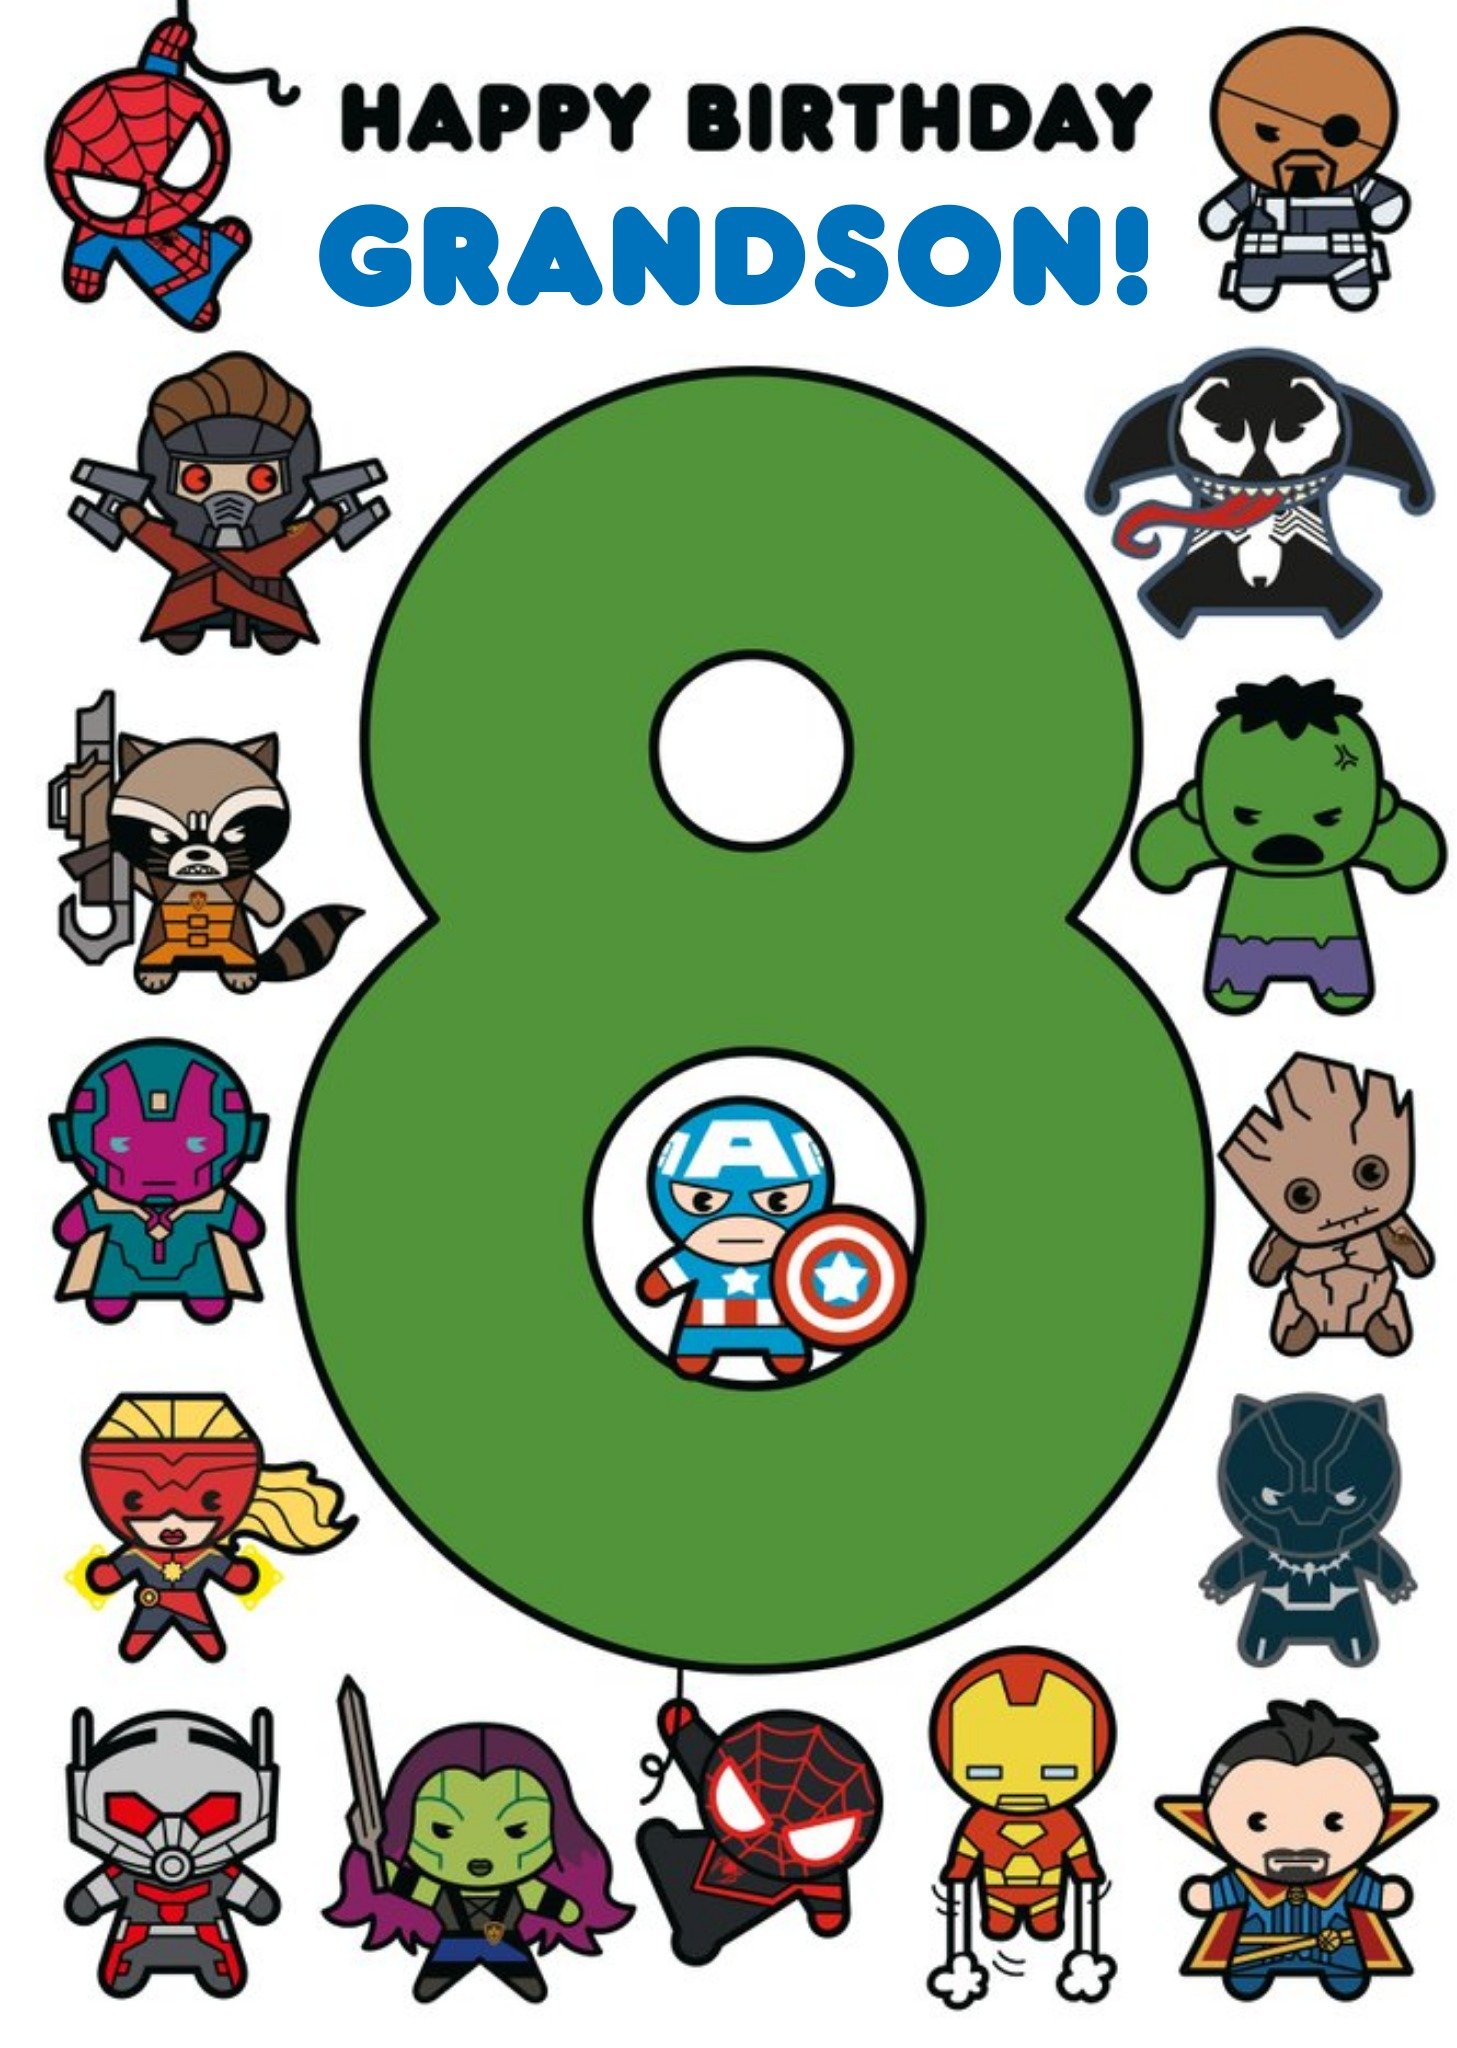 Marvel Comics Characters 8 Grandson Card, Large